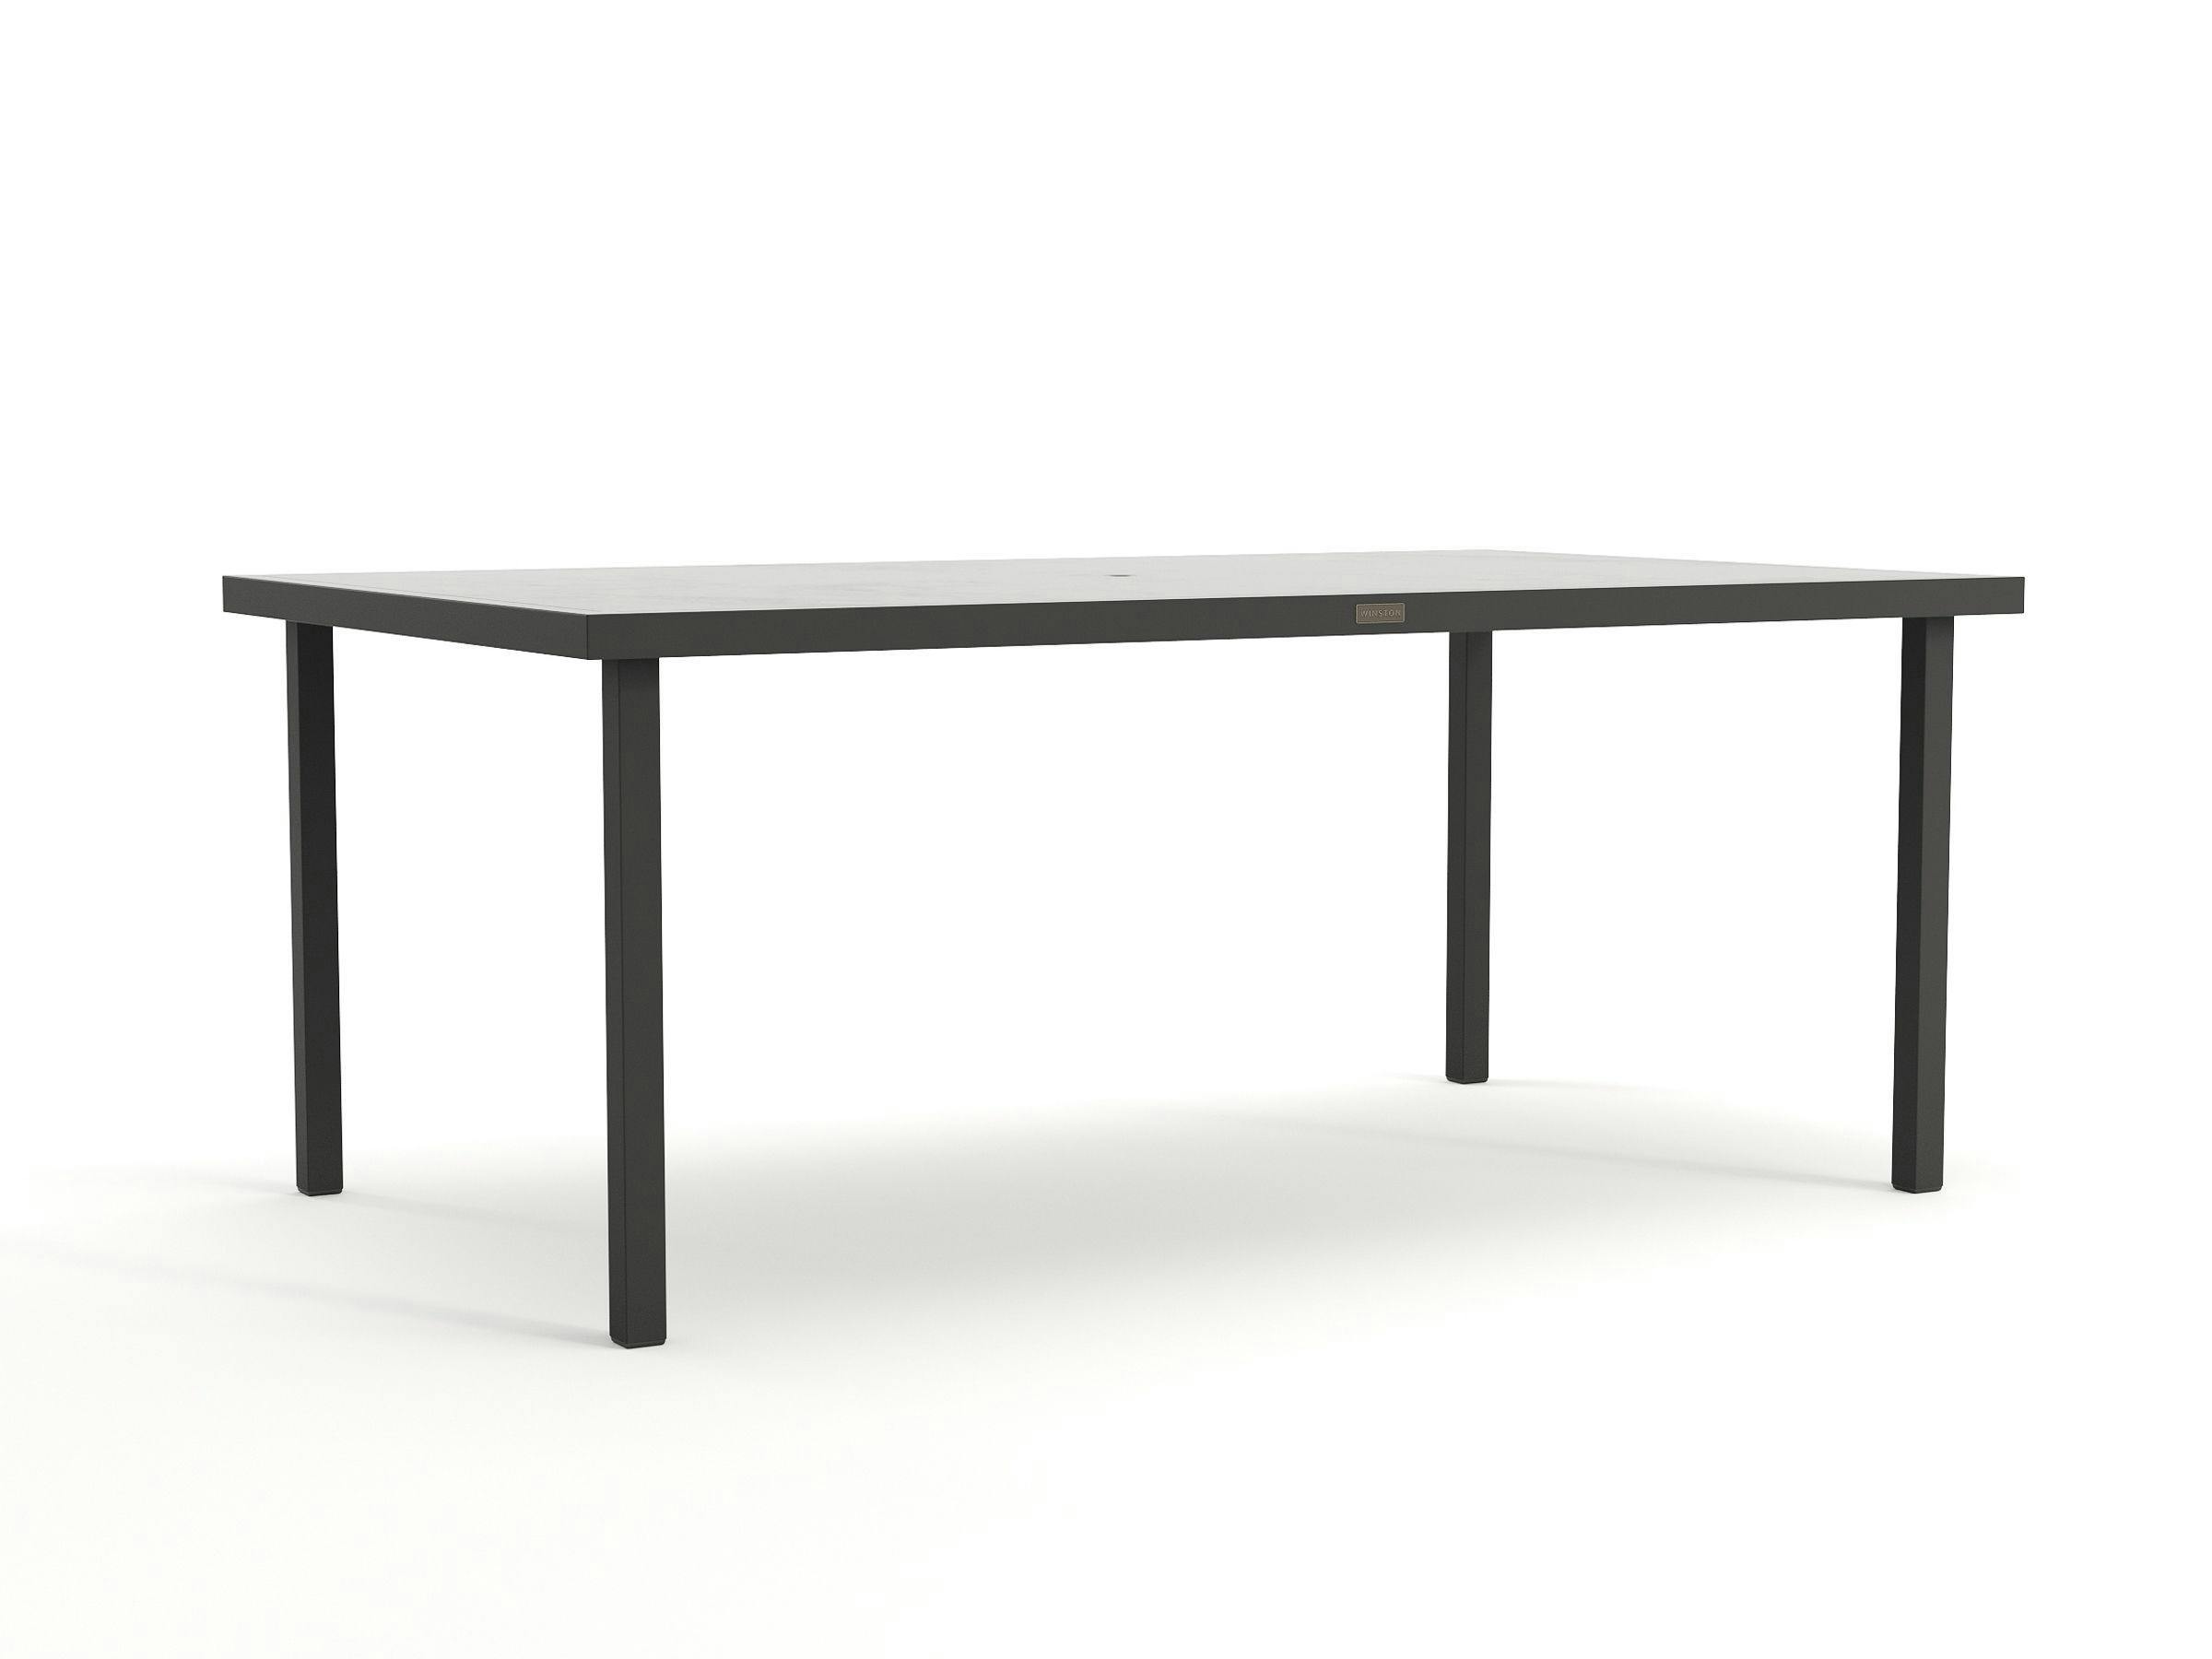 44" x 73" Rectangular Dining Table